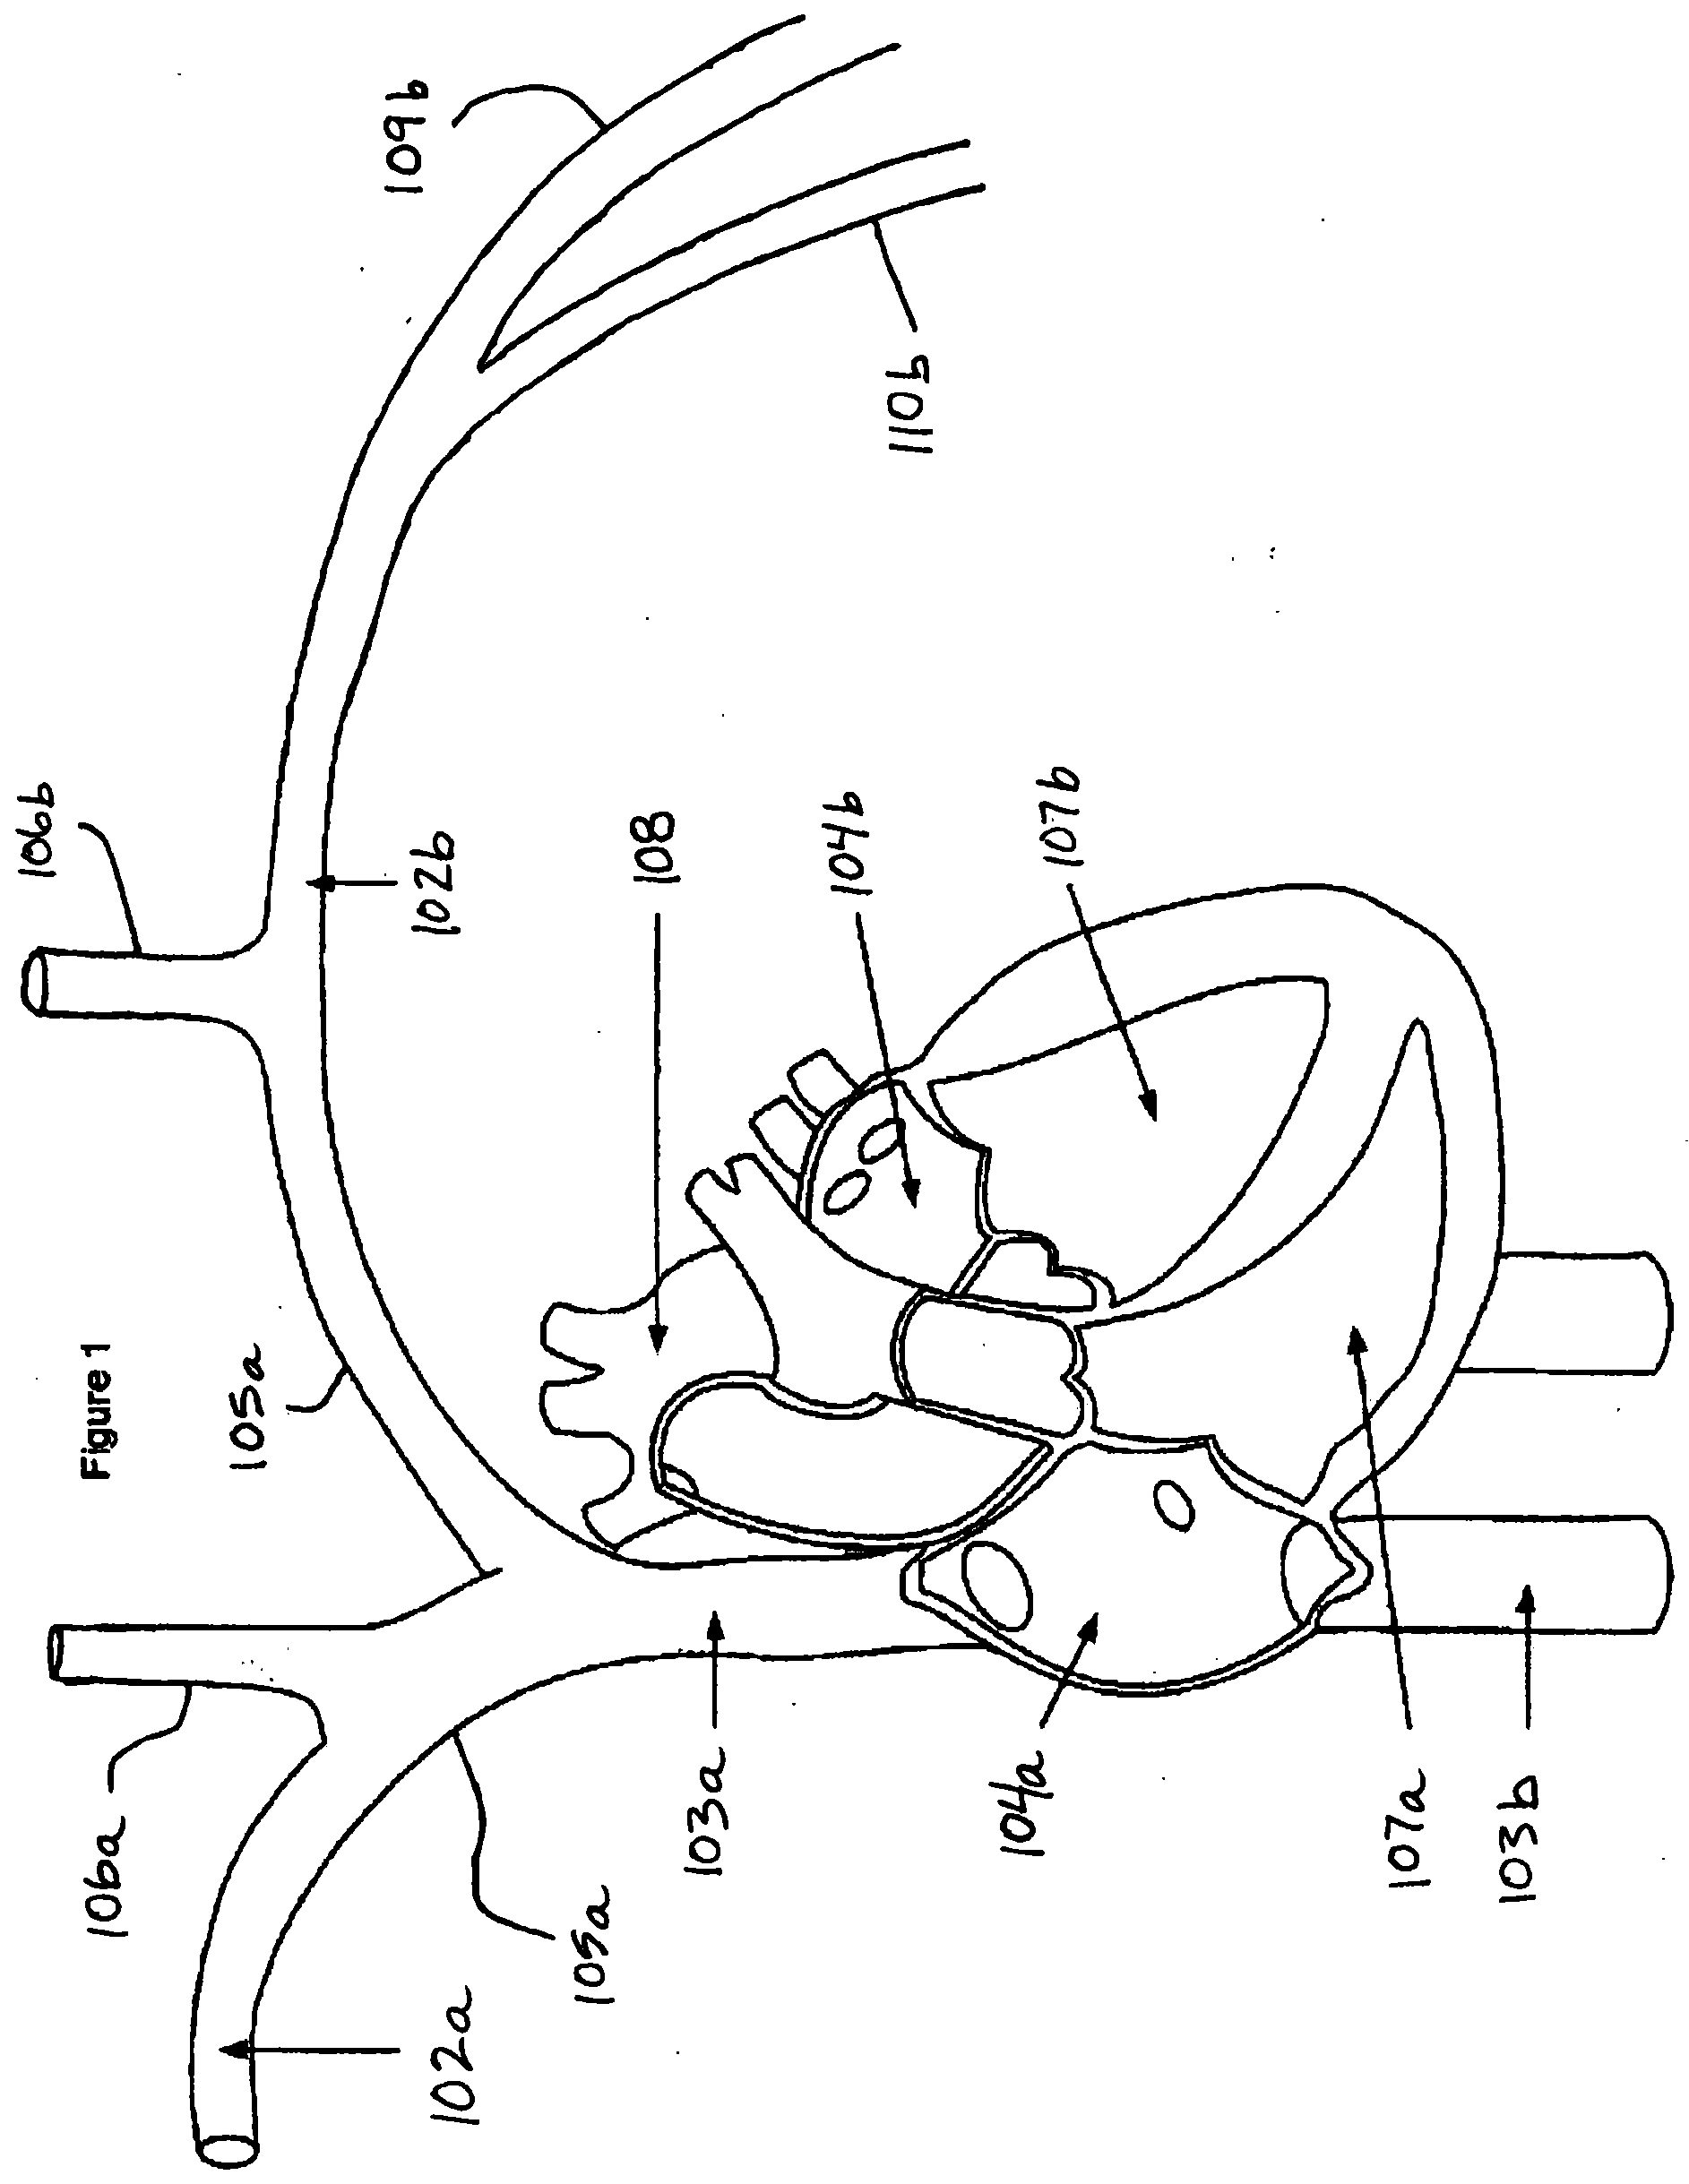 Intravascular implantable device having superior anchoring arrangement